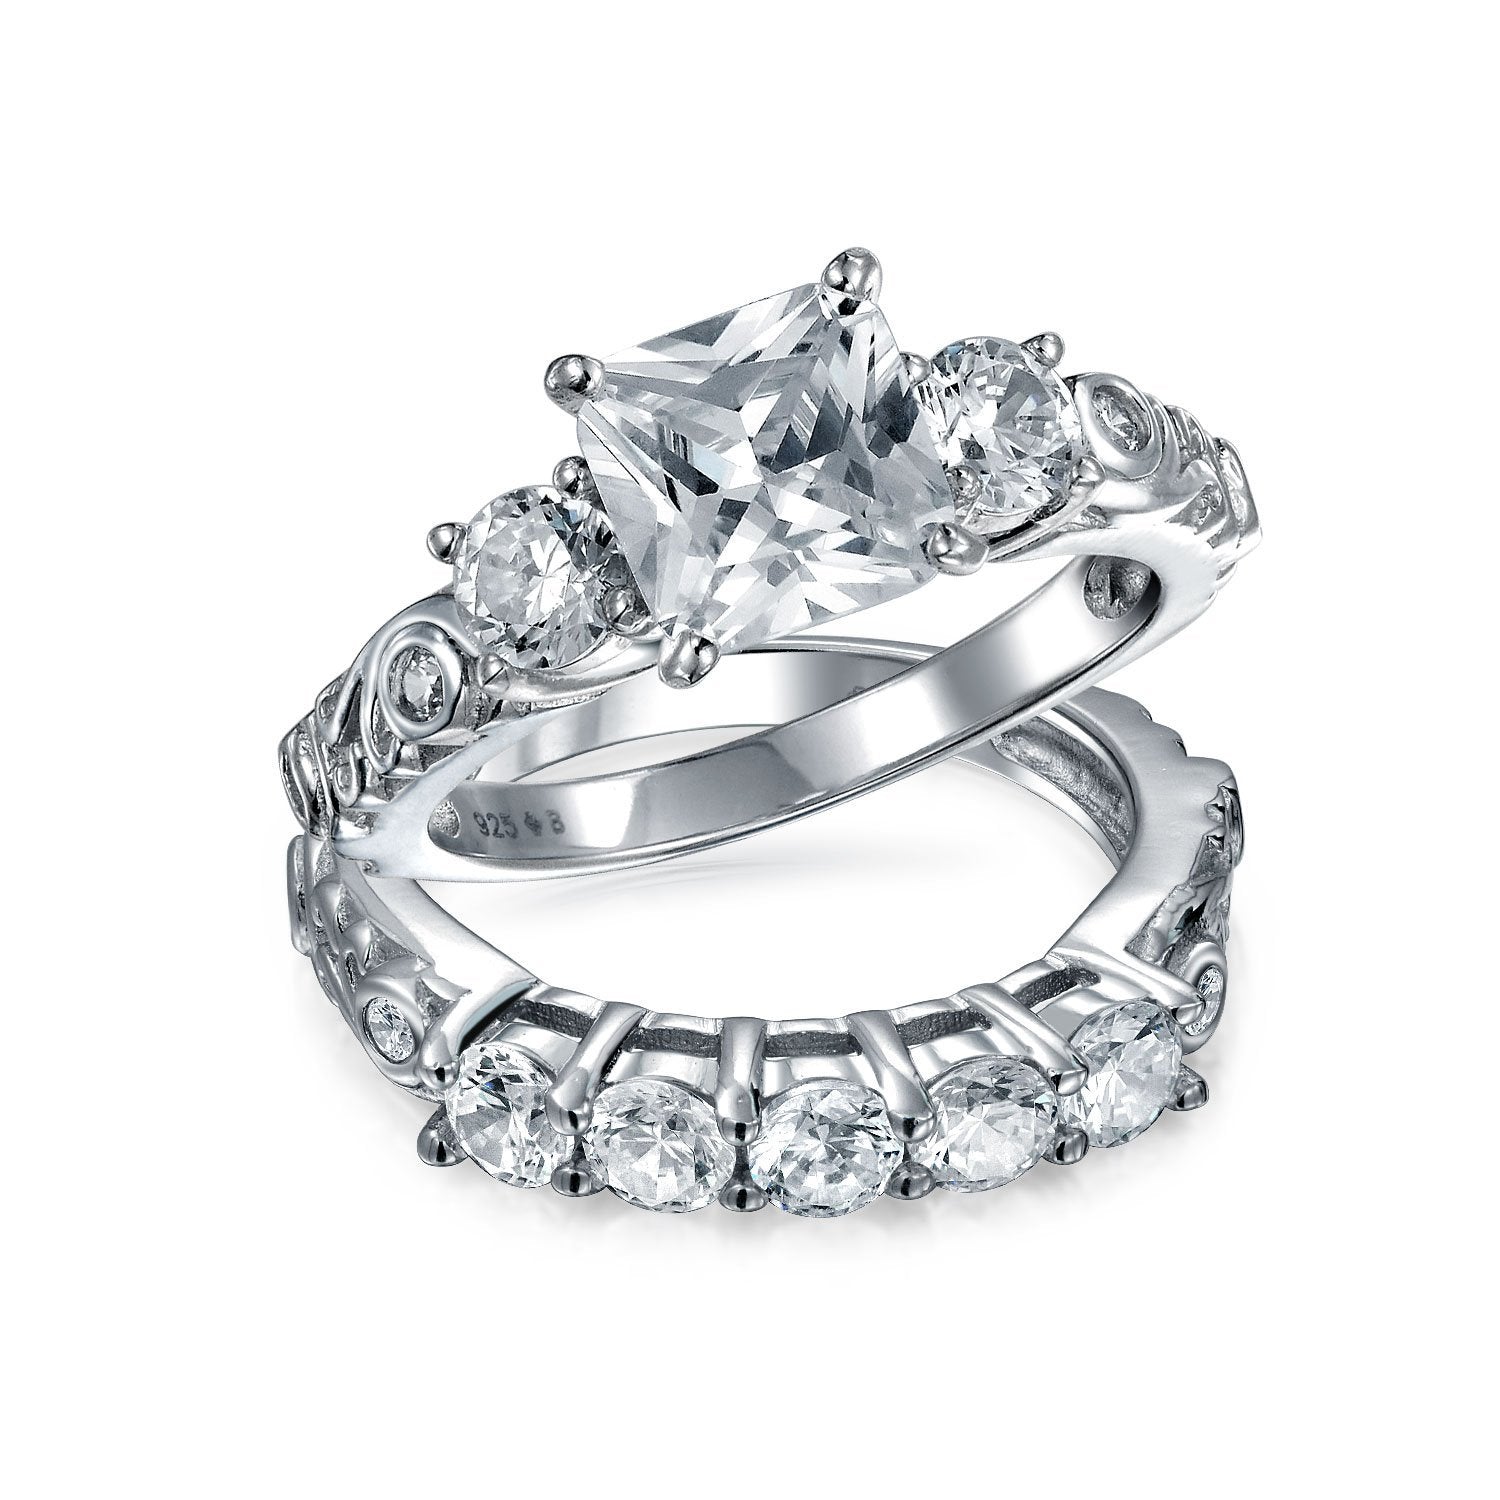 3CT CZ Square Princess AA Engagement Wedding Ring Band Set Gold Plated - Joyeria Lady